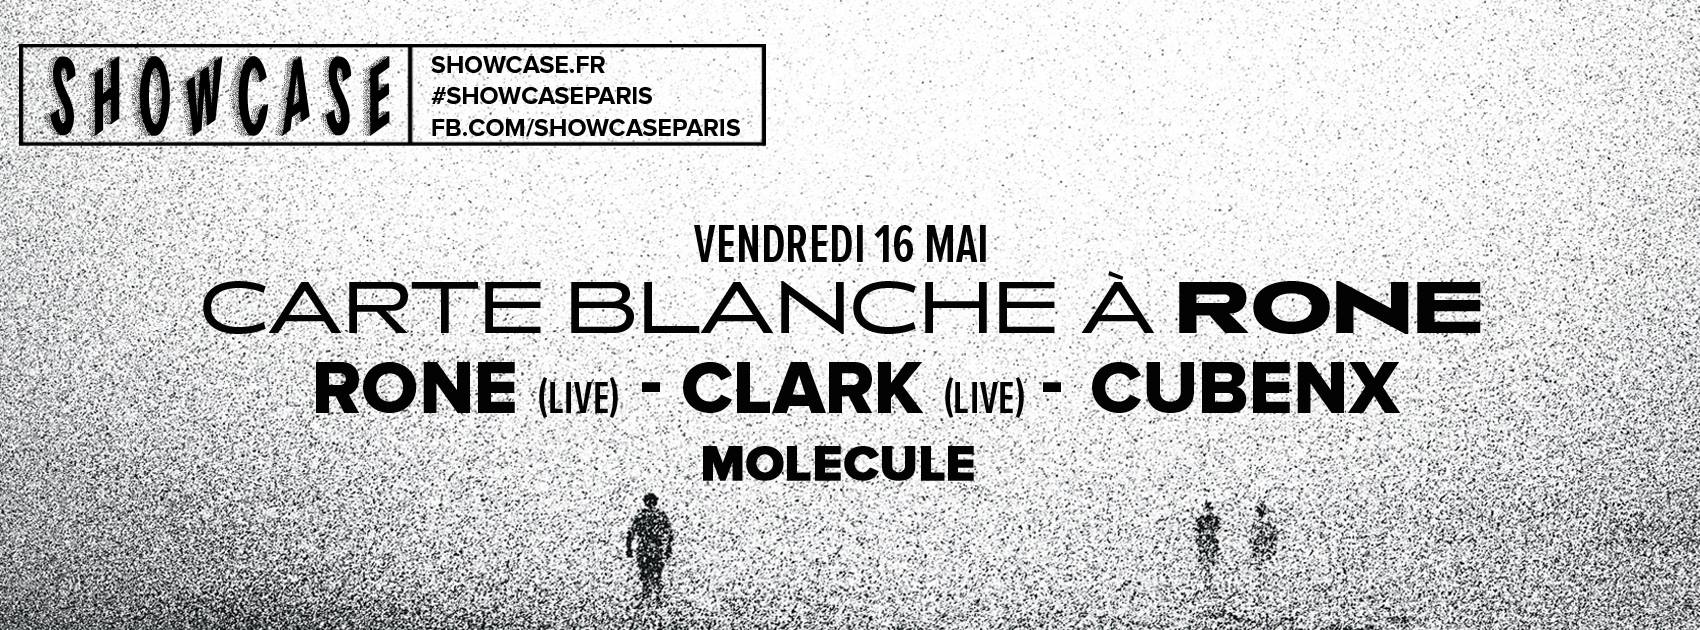 Rone - Clark - Cubenx au Showcase